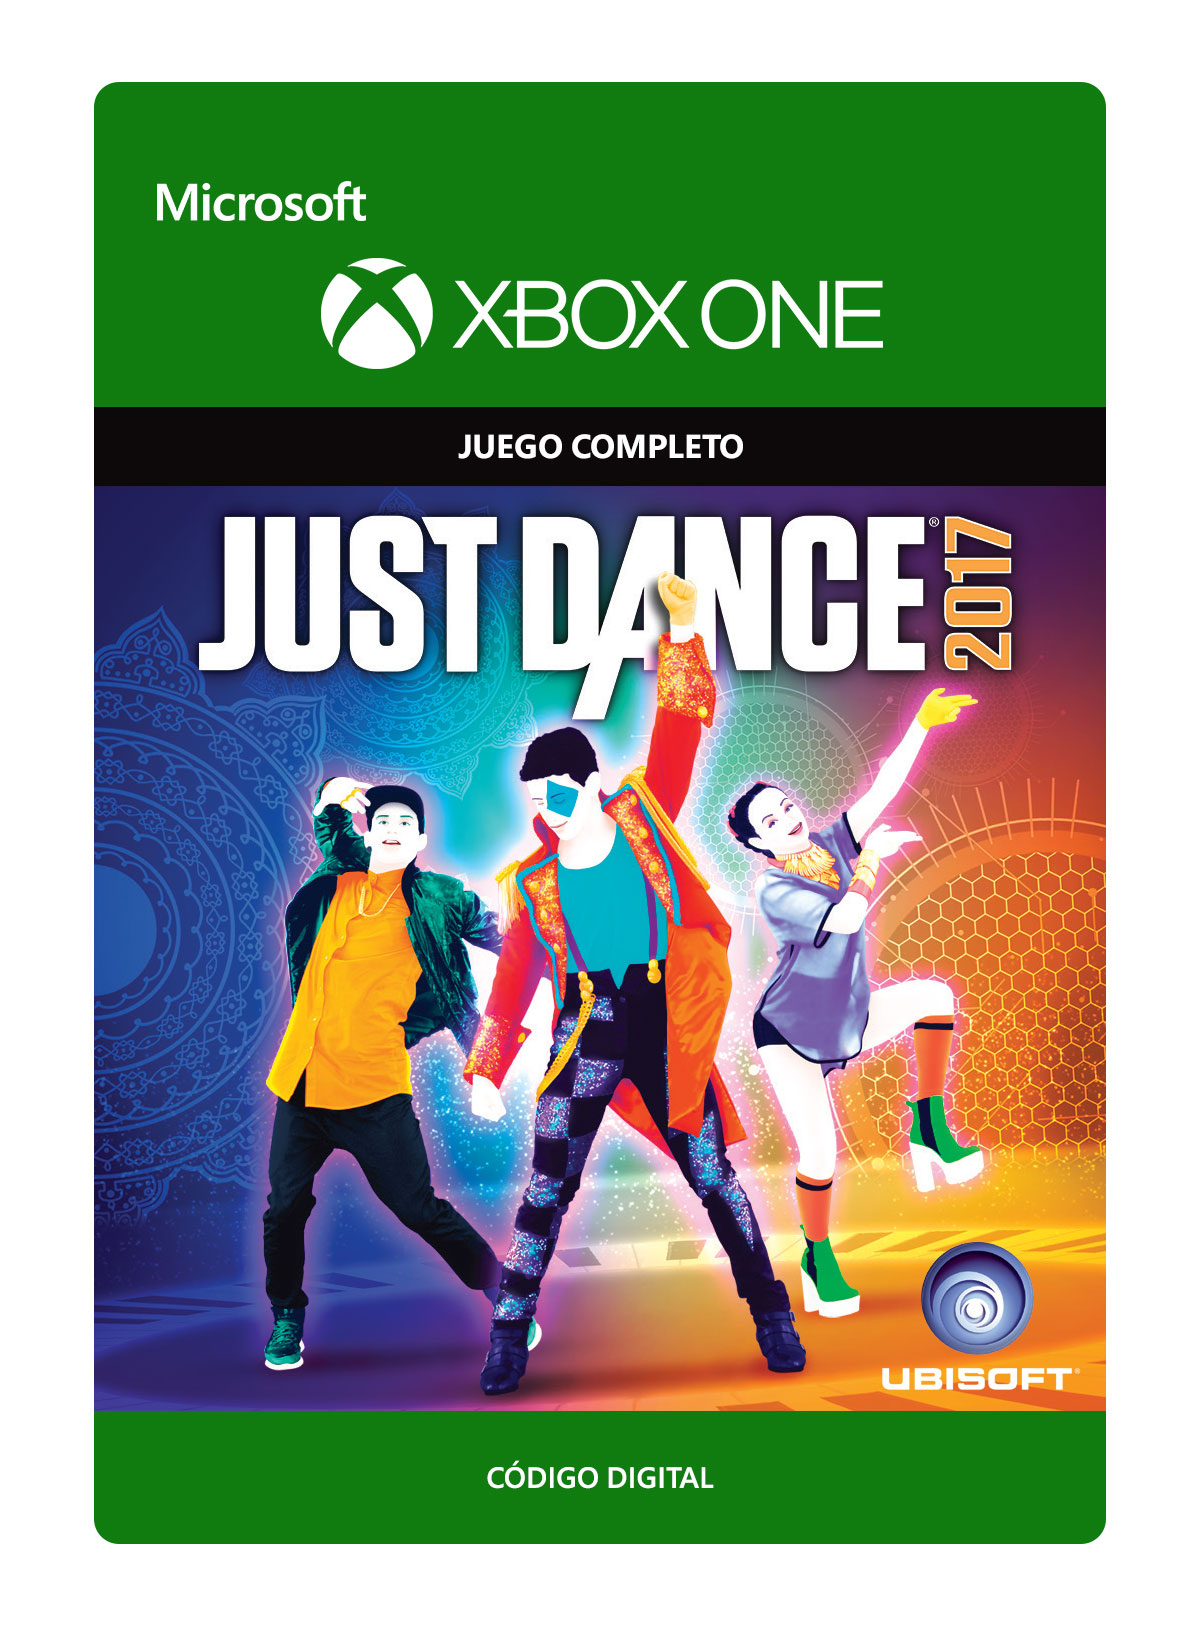 Xbox One - Just Dance 2017 - Juego Completo Descargable